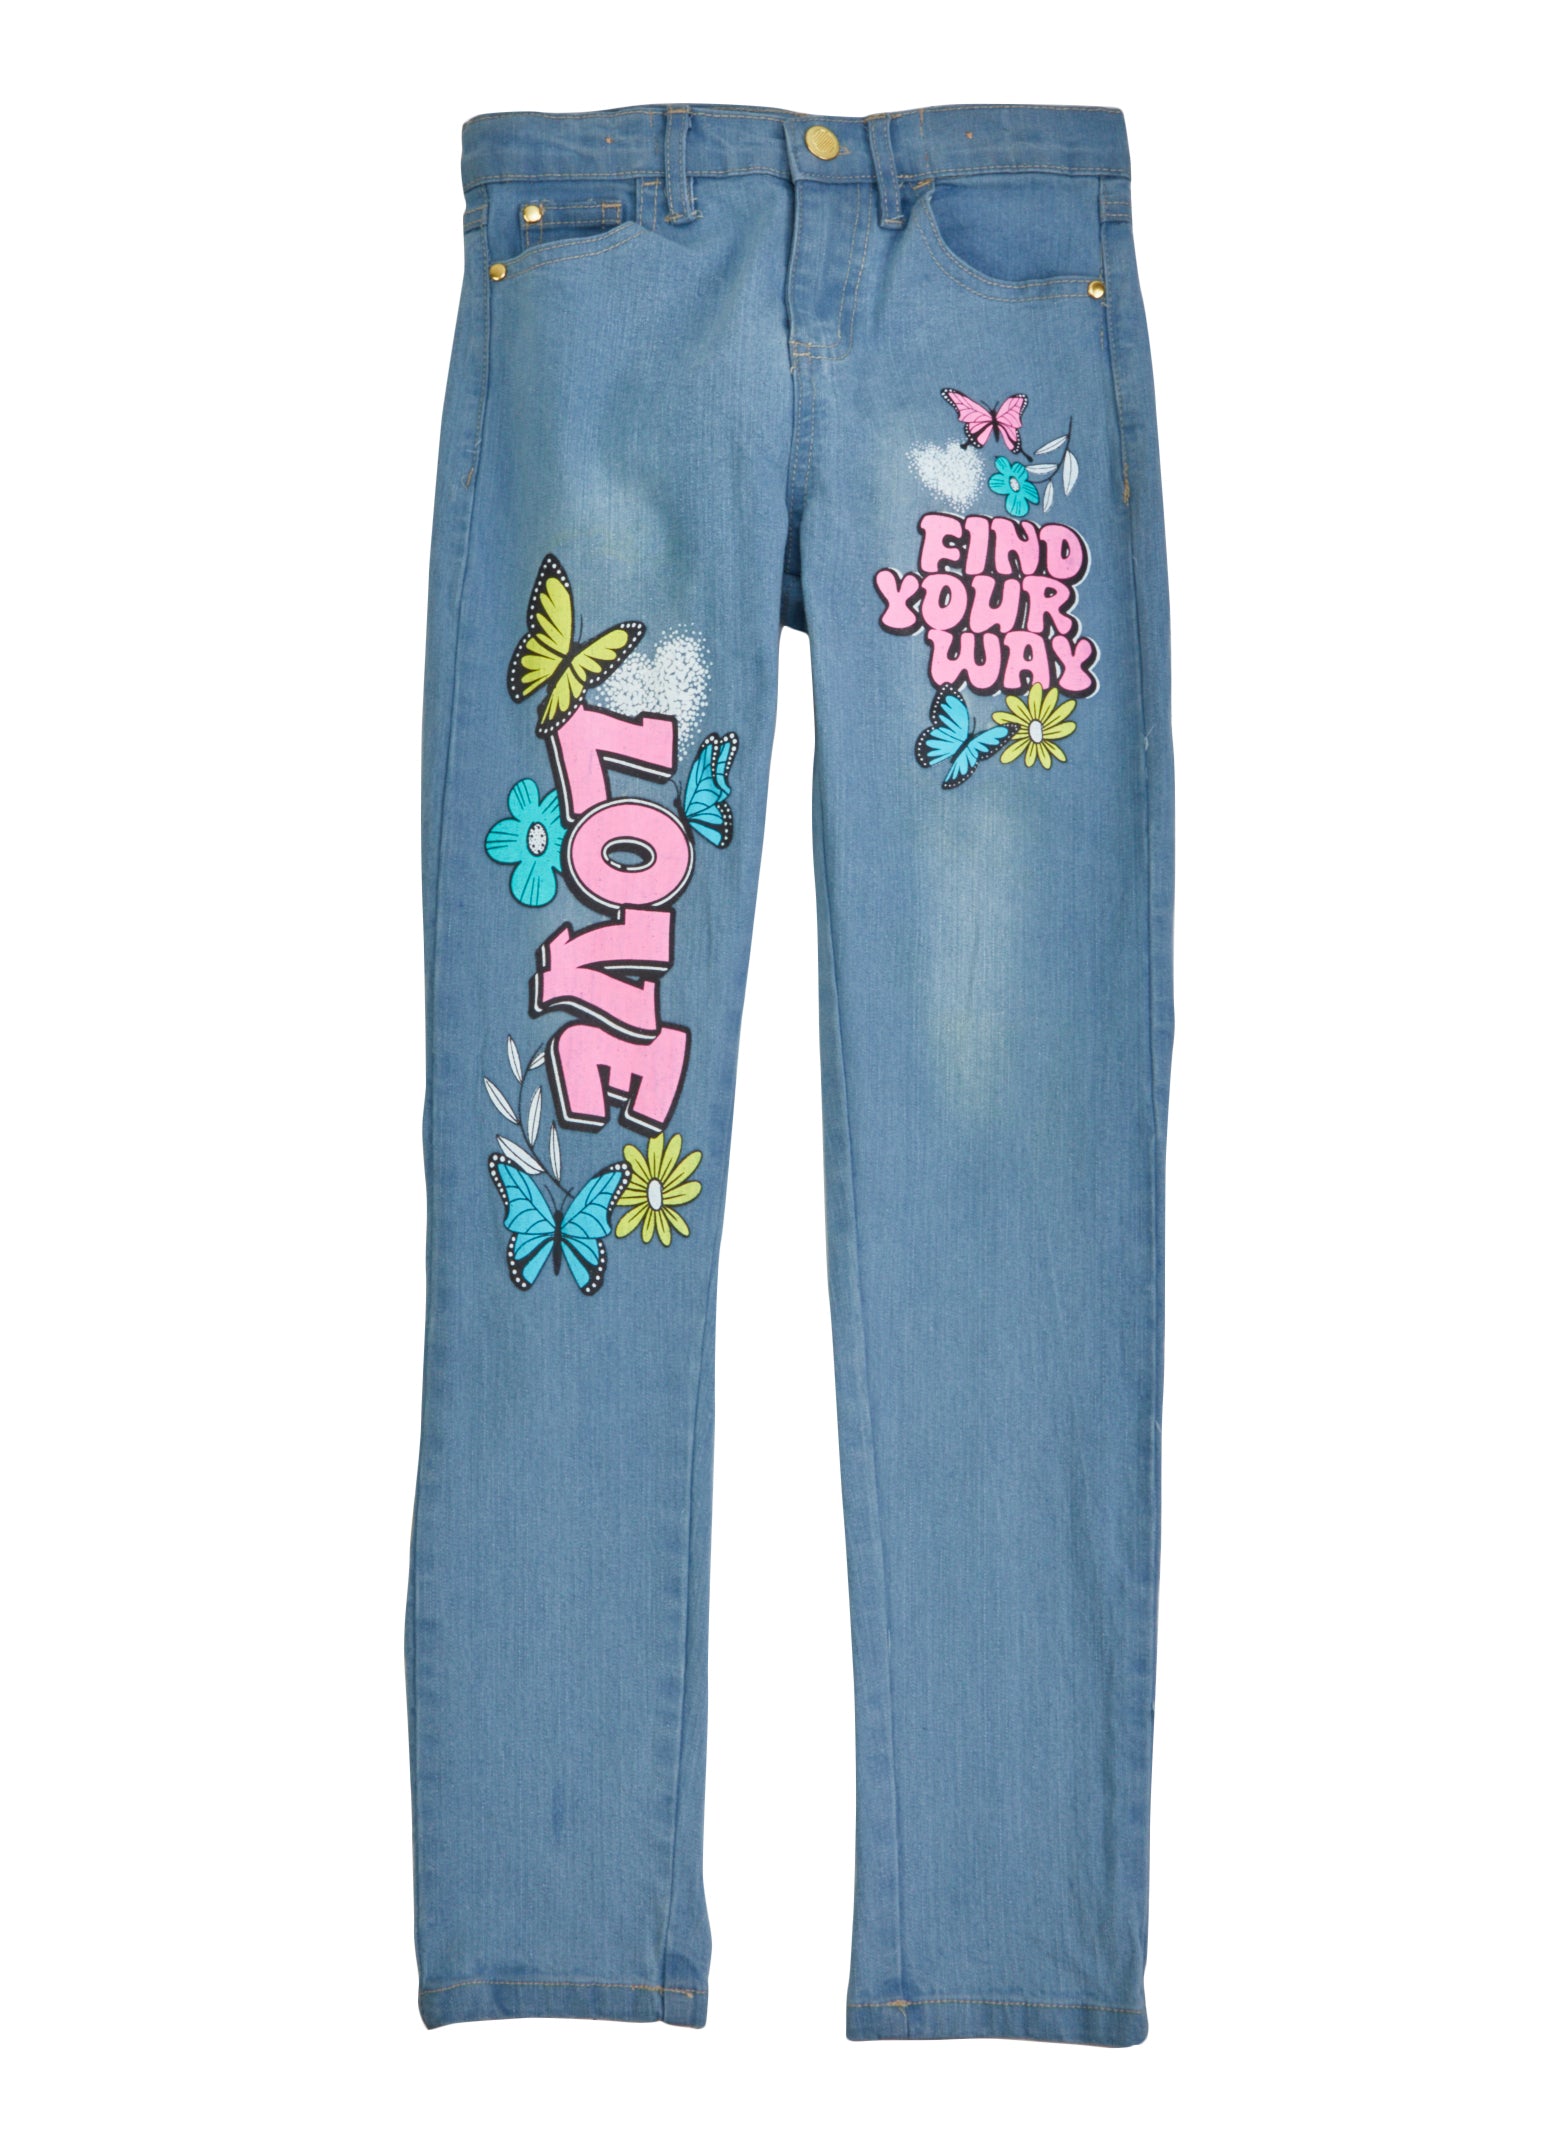 Cute Teen Girl jeans juniors plus denim skinny pants for Teen Girls acid  washed light dark blue 